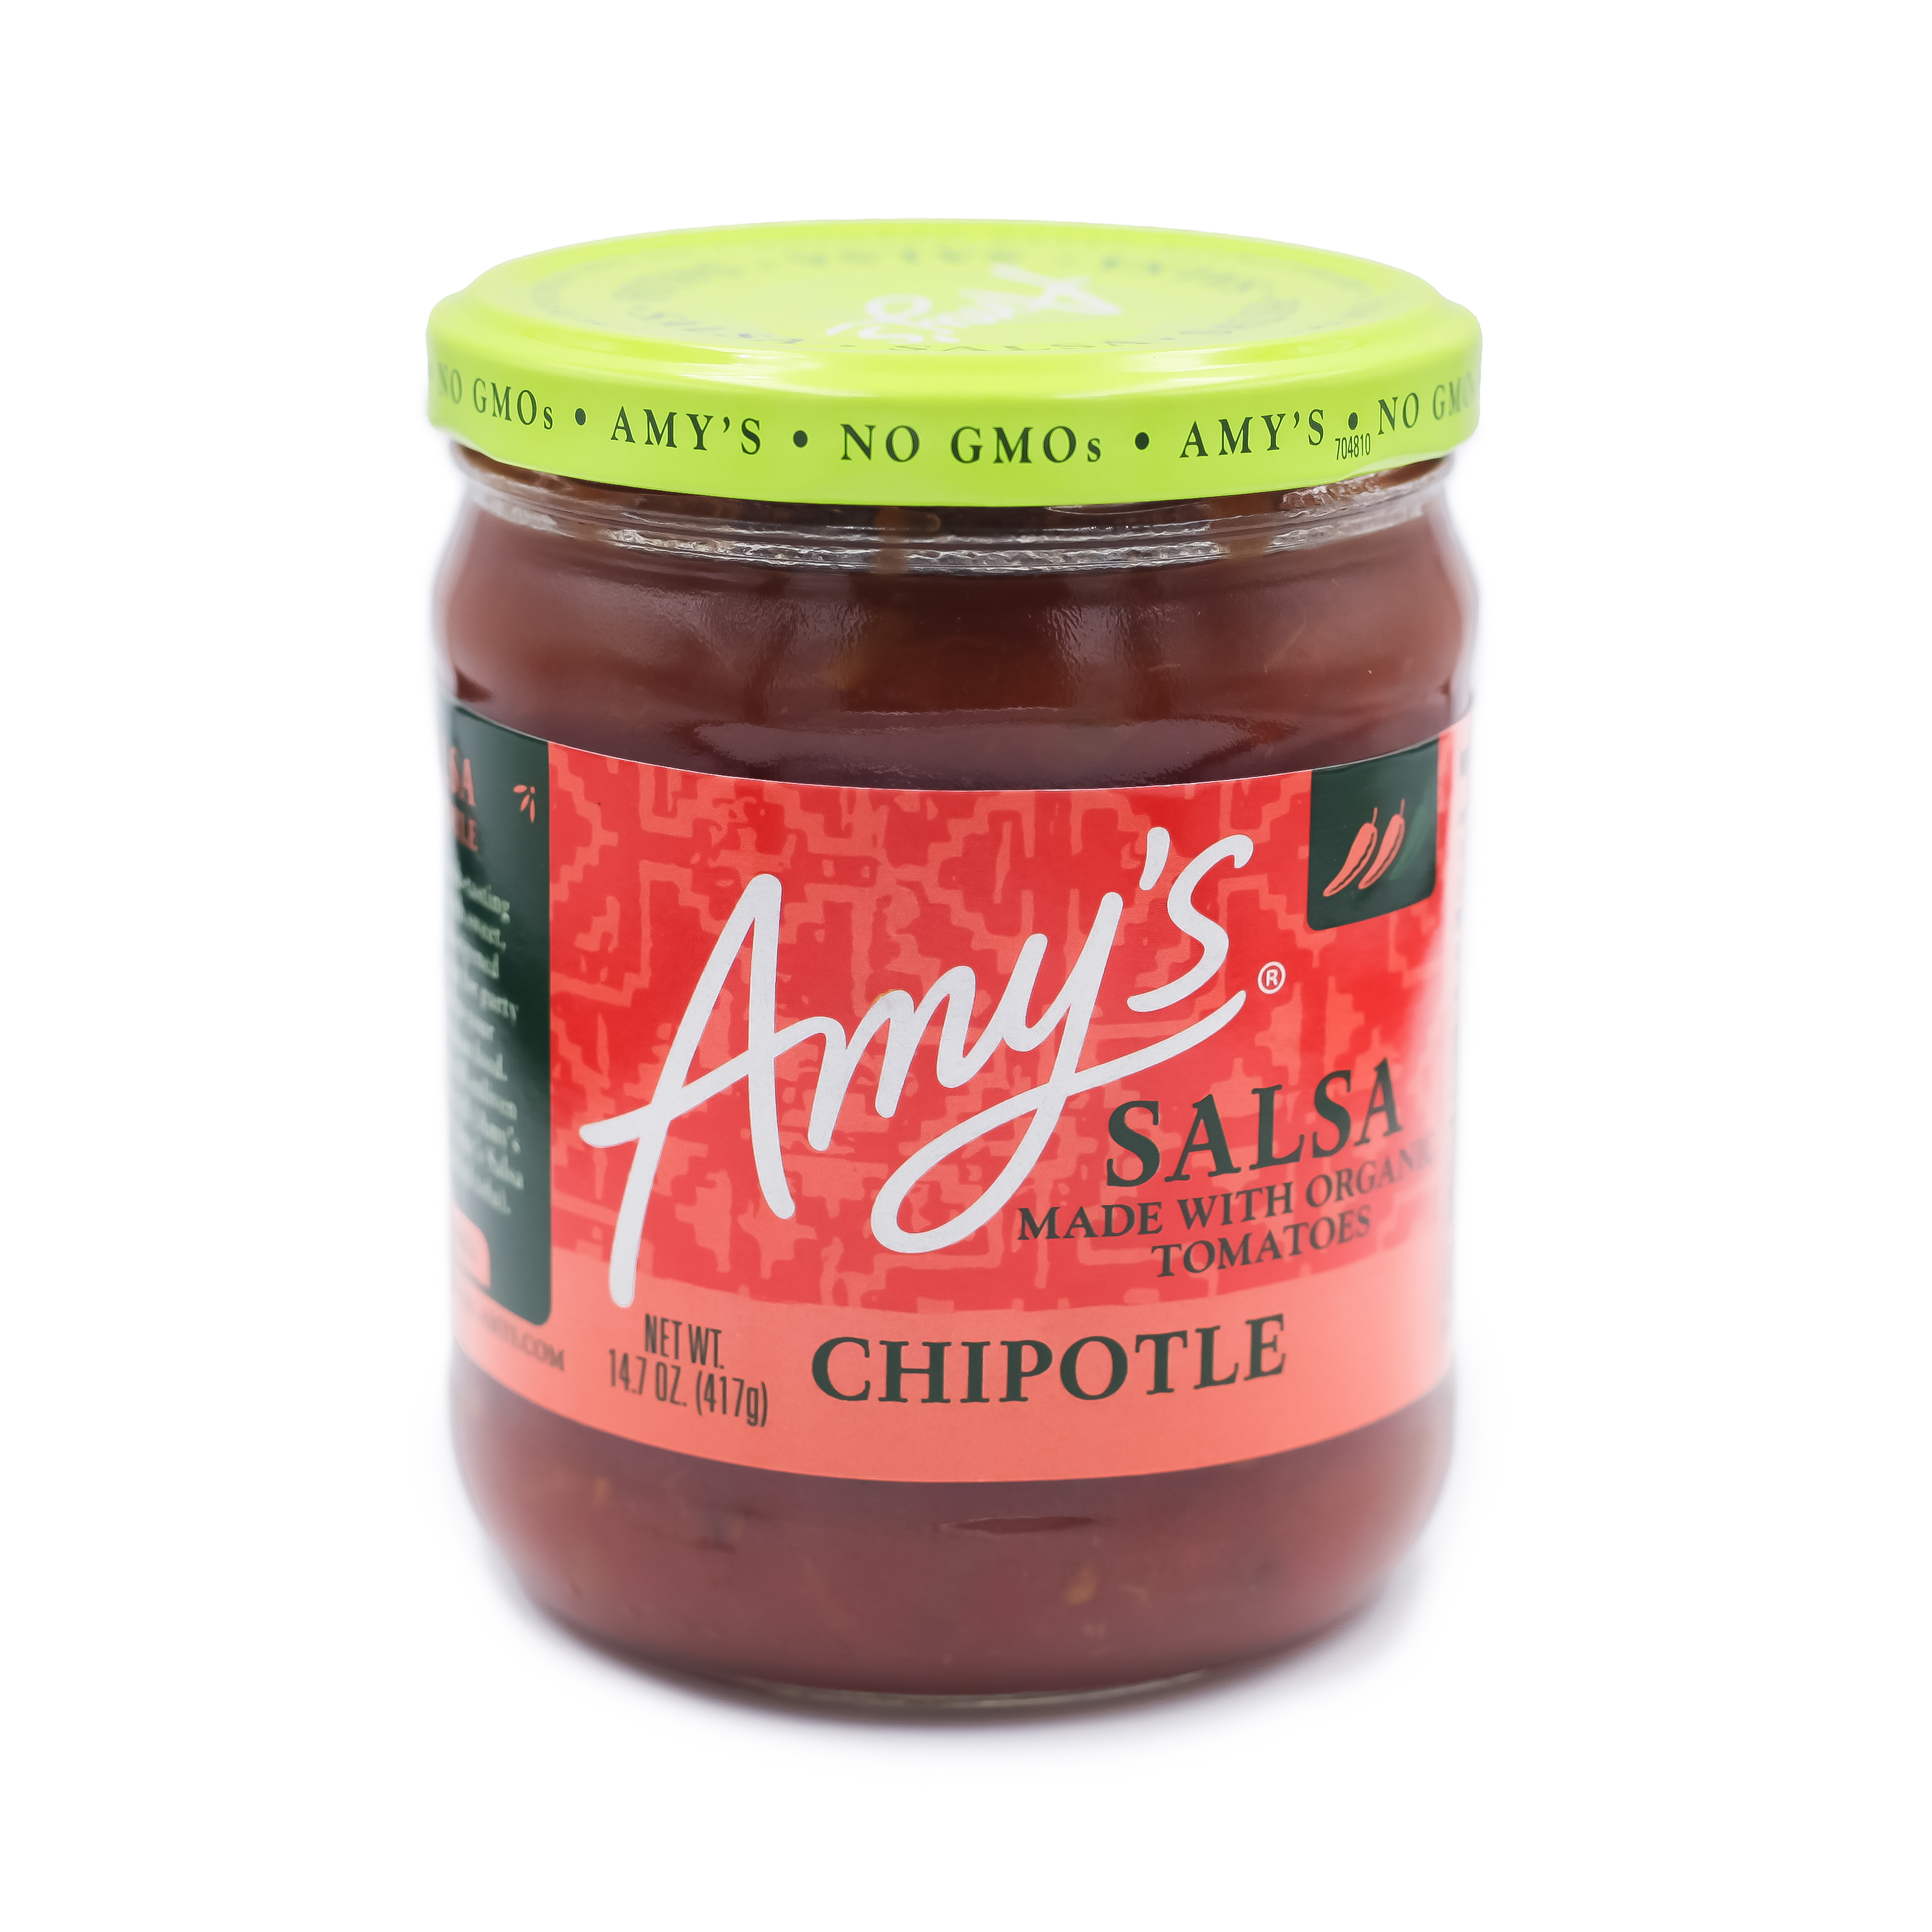 Amy's Chipotle Salsa